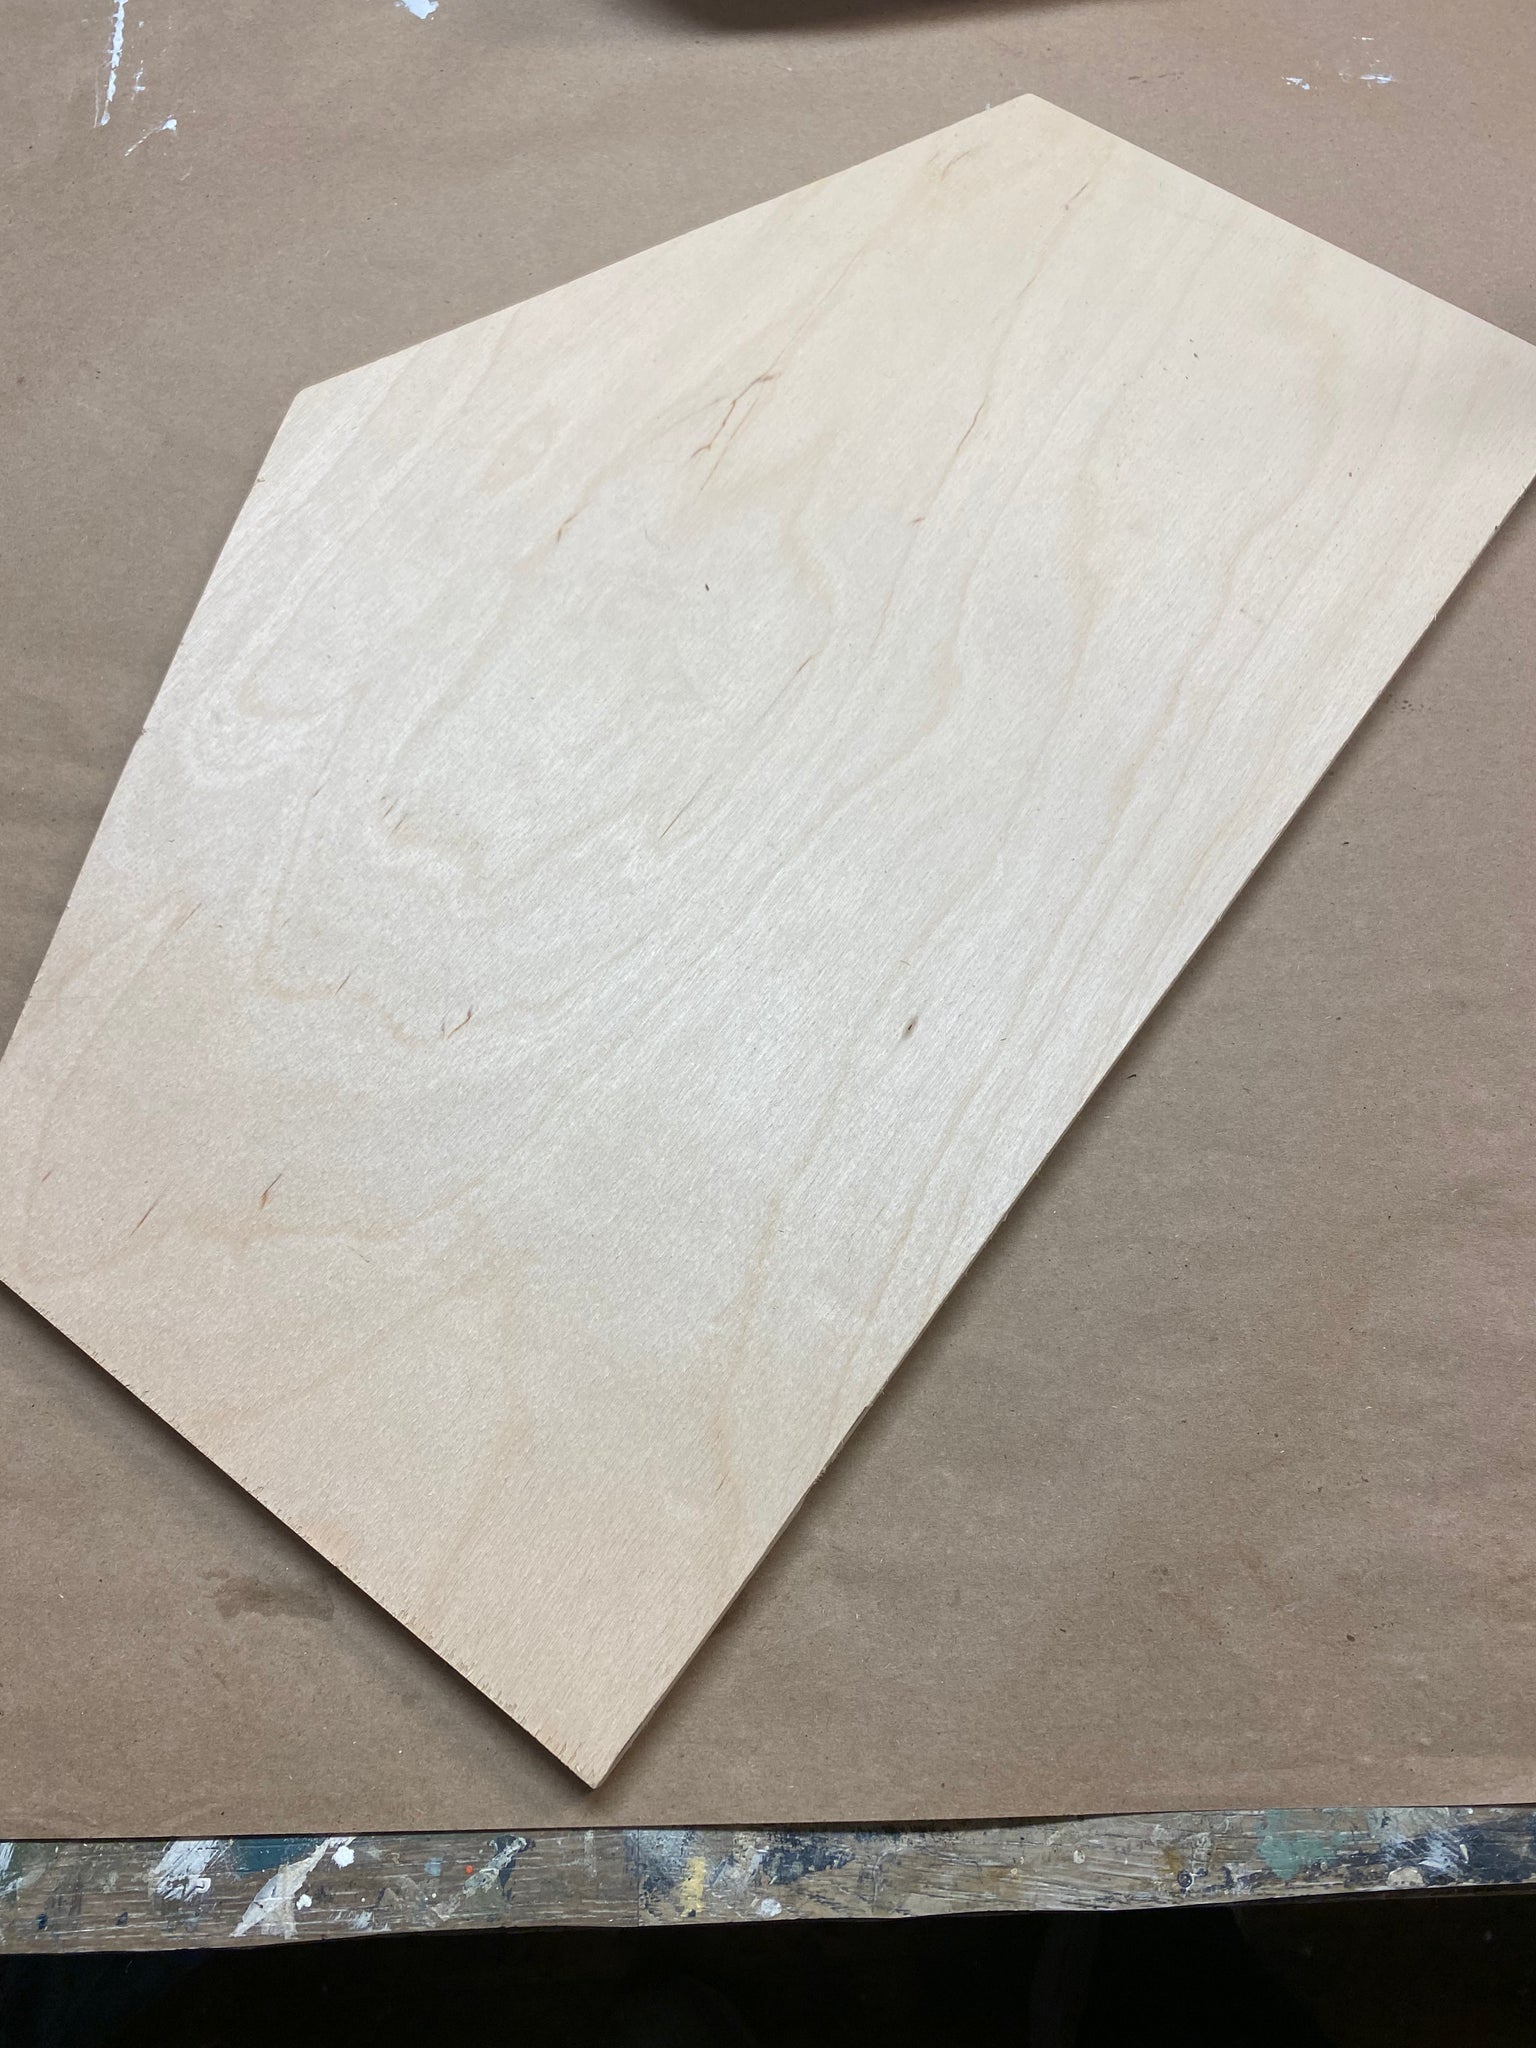 House shaped wood board